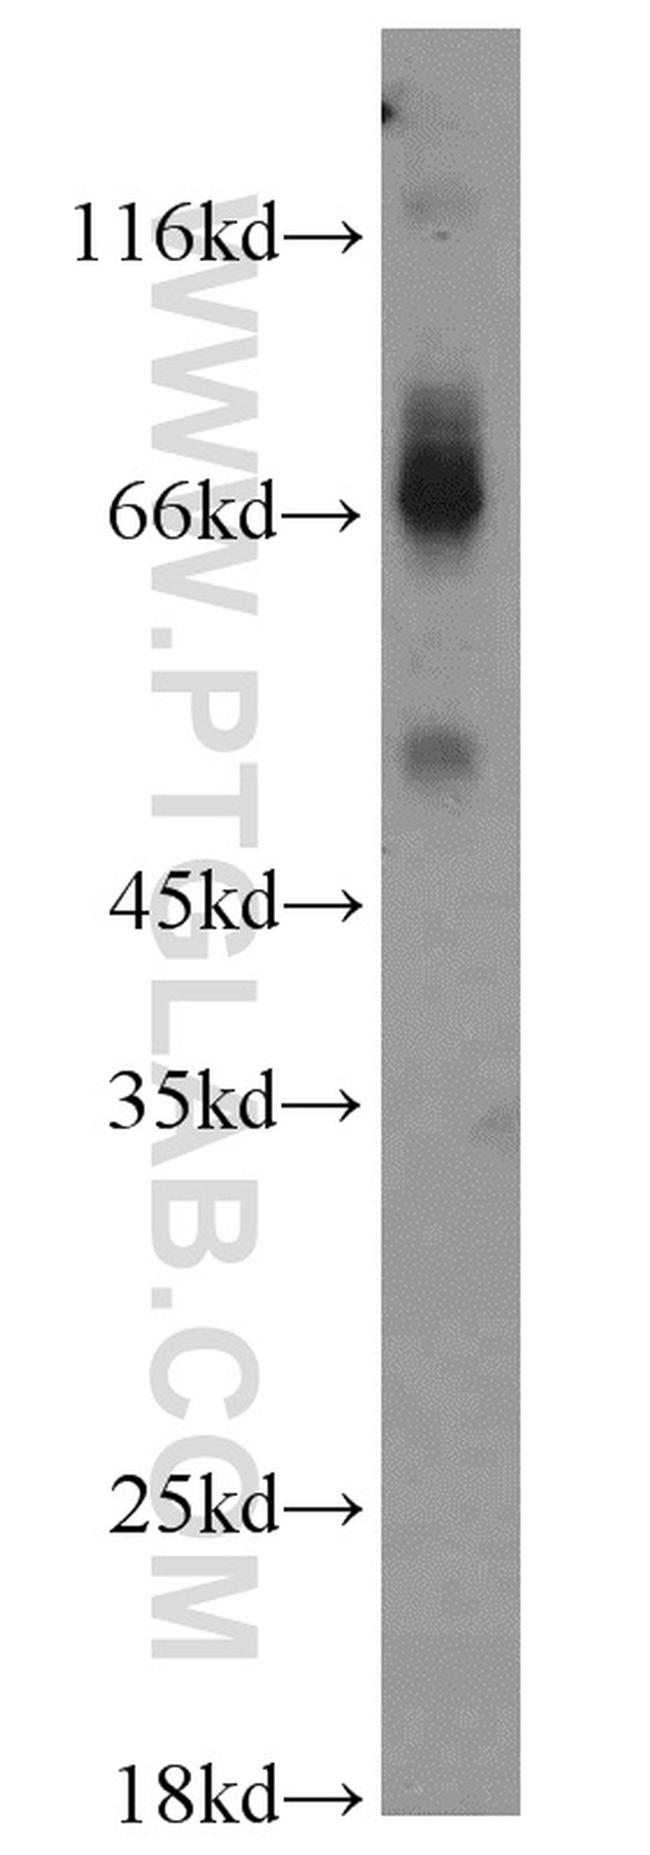 MAPKAPK2 Antibody in Western Blot (WB)